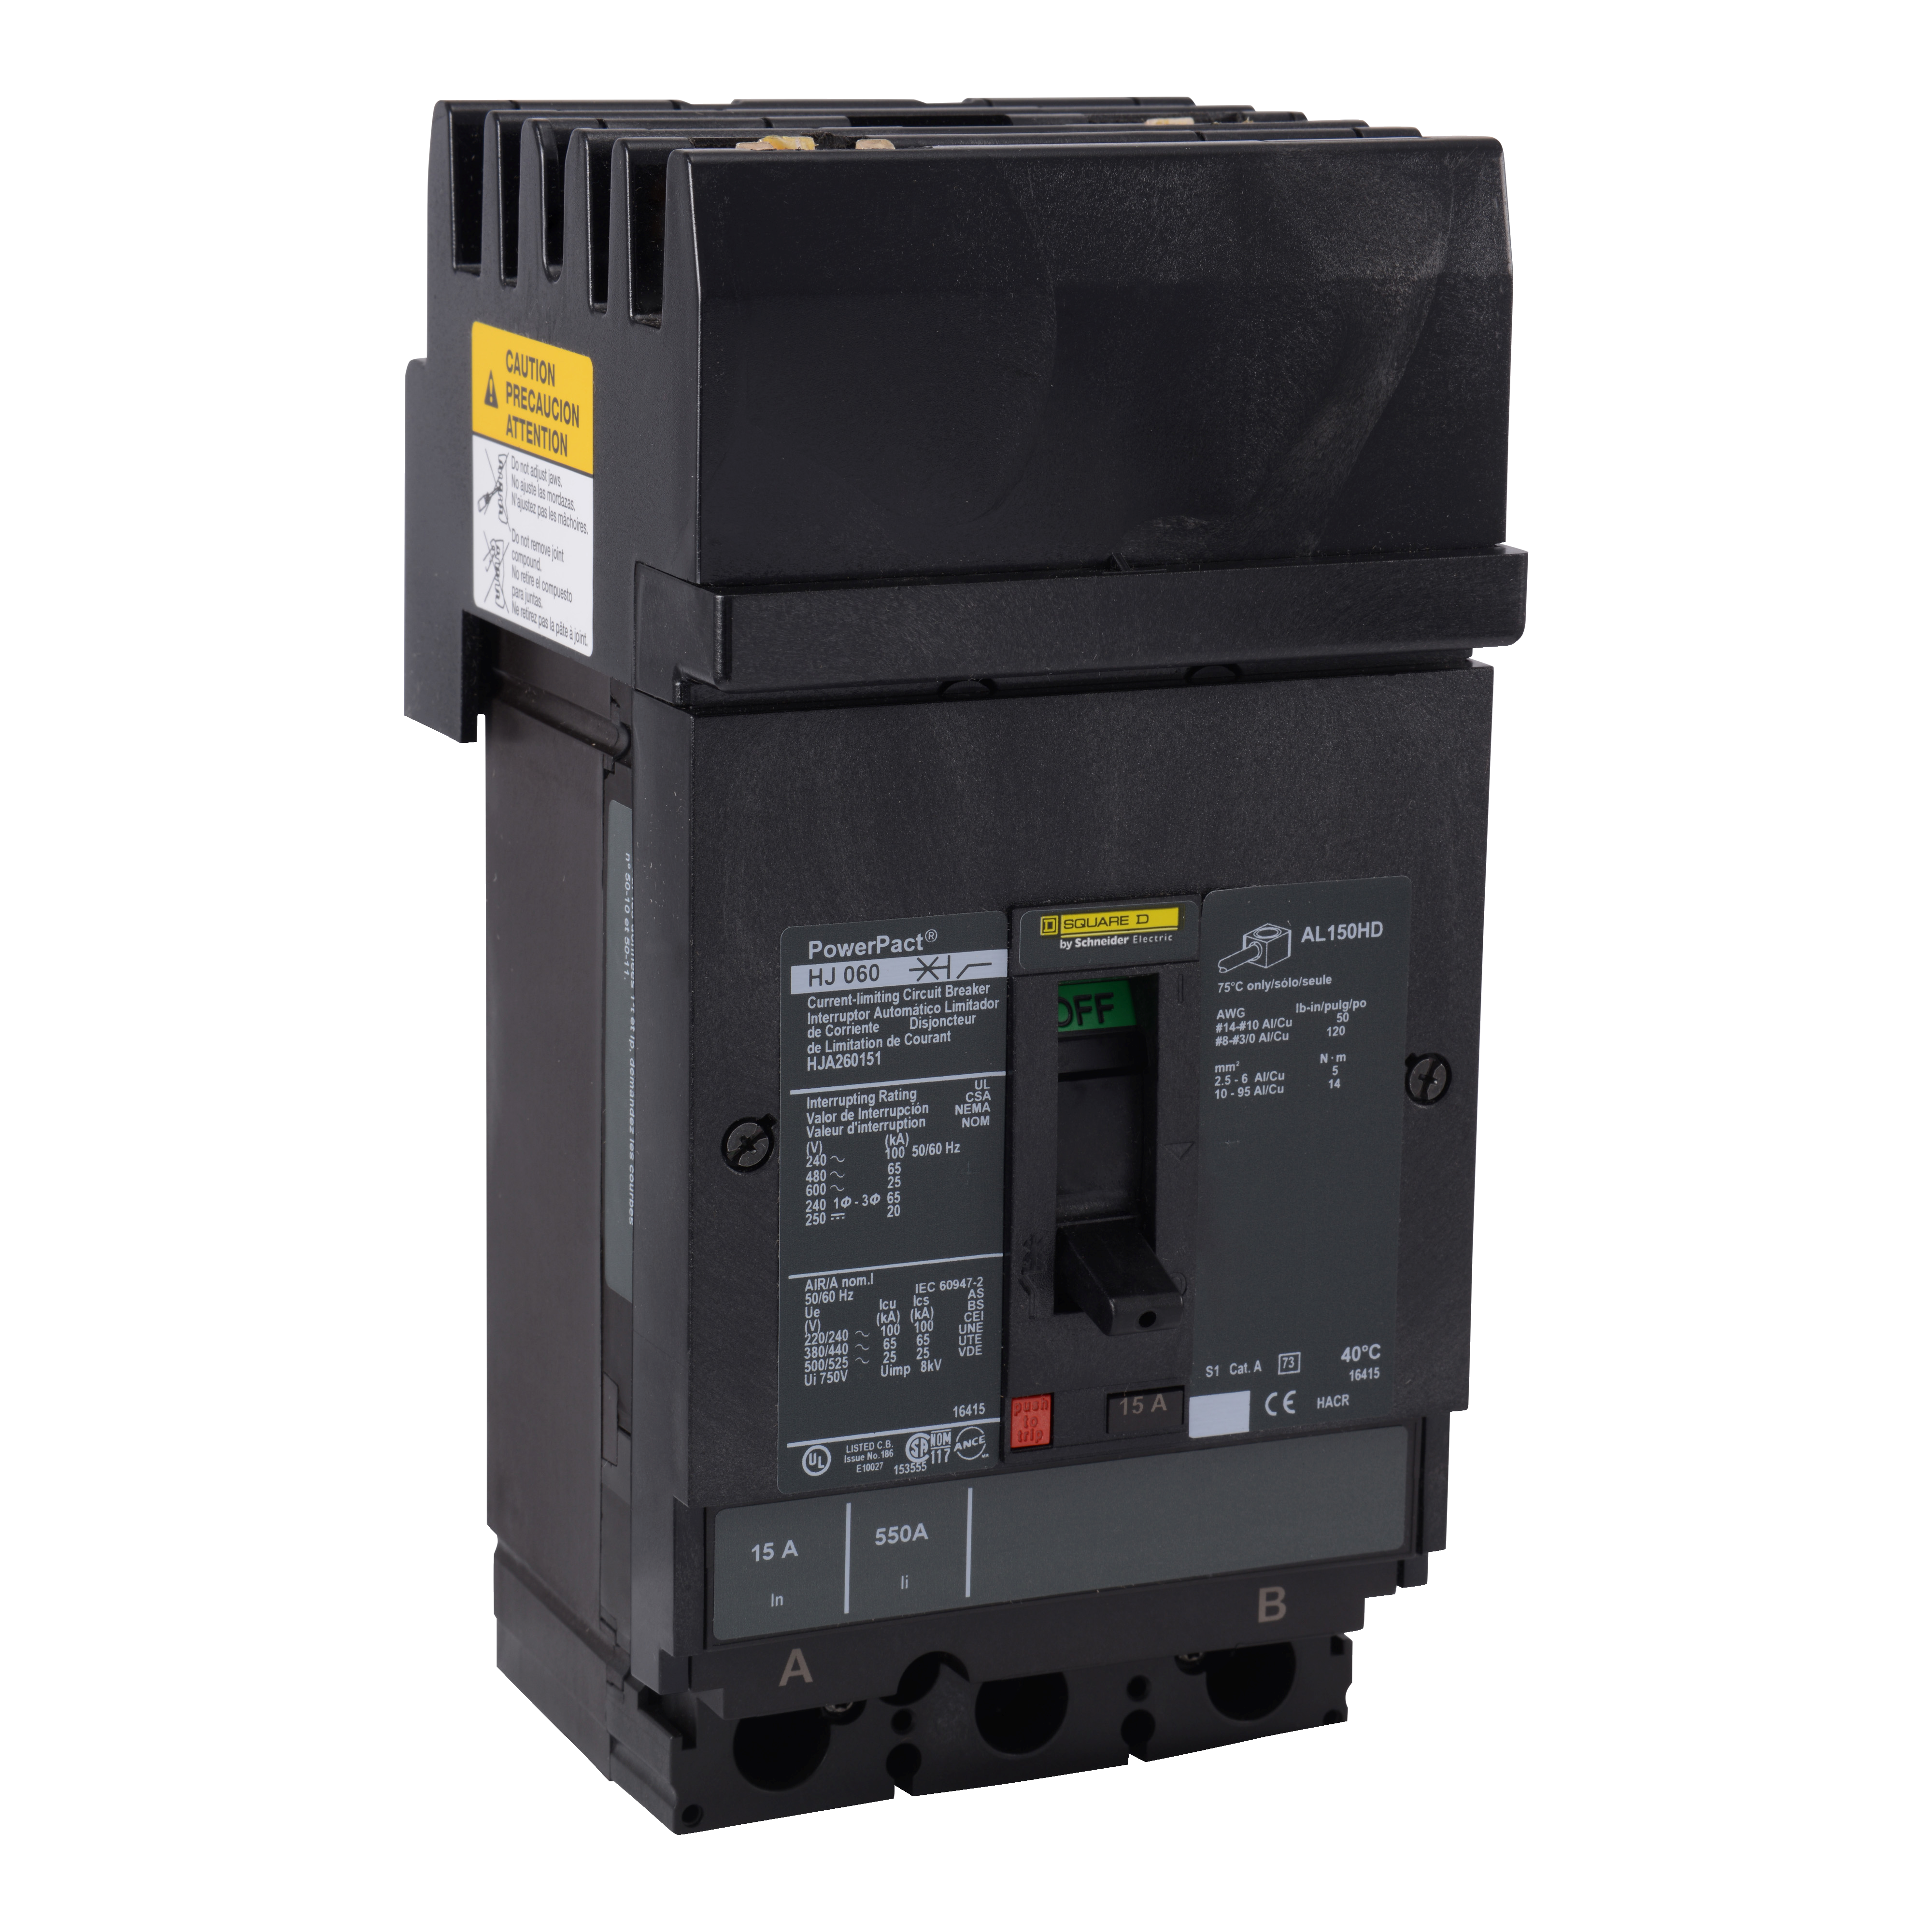 Circuit breaker, PowerPacT H, 90A, 2 pole, 600VAC, 25kA, I-Line, thermal magnetic, 80%, AB